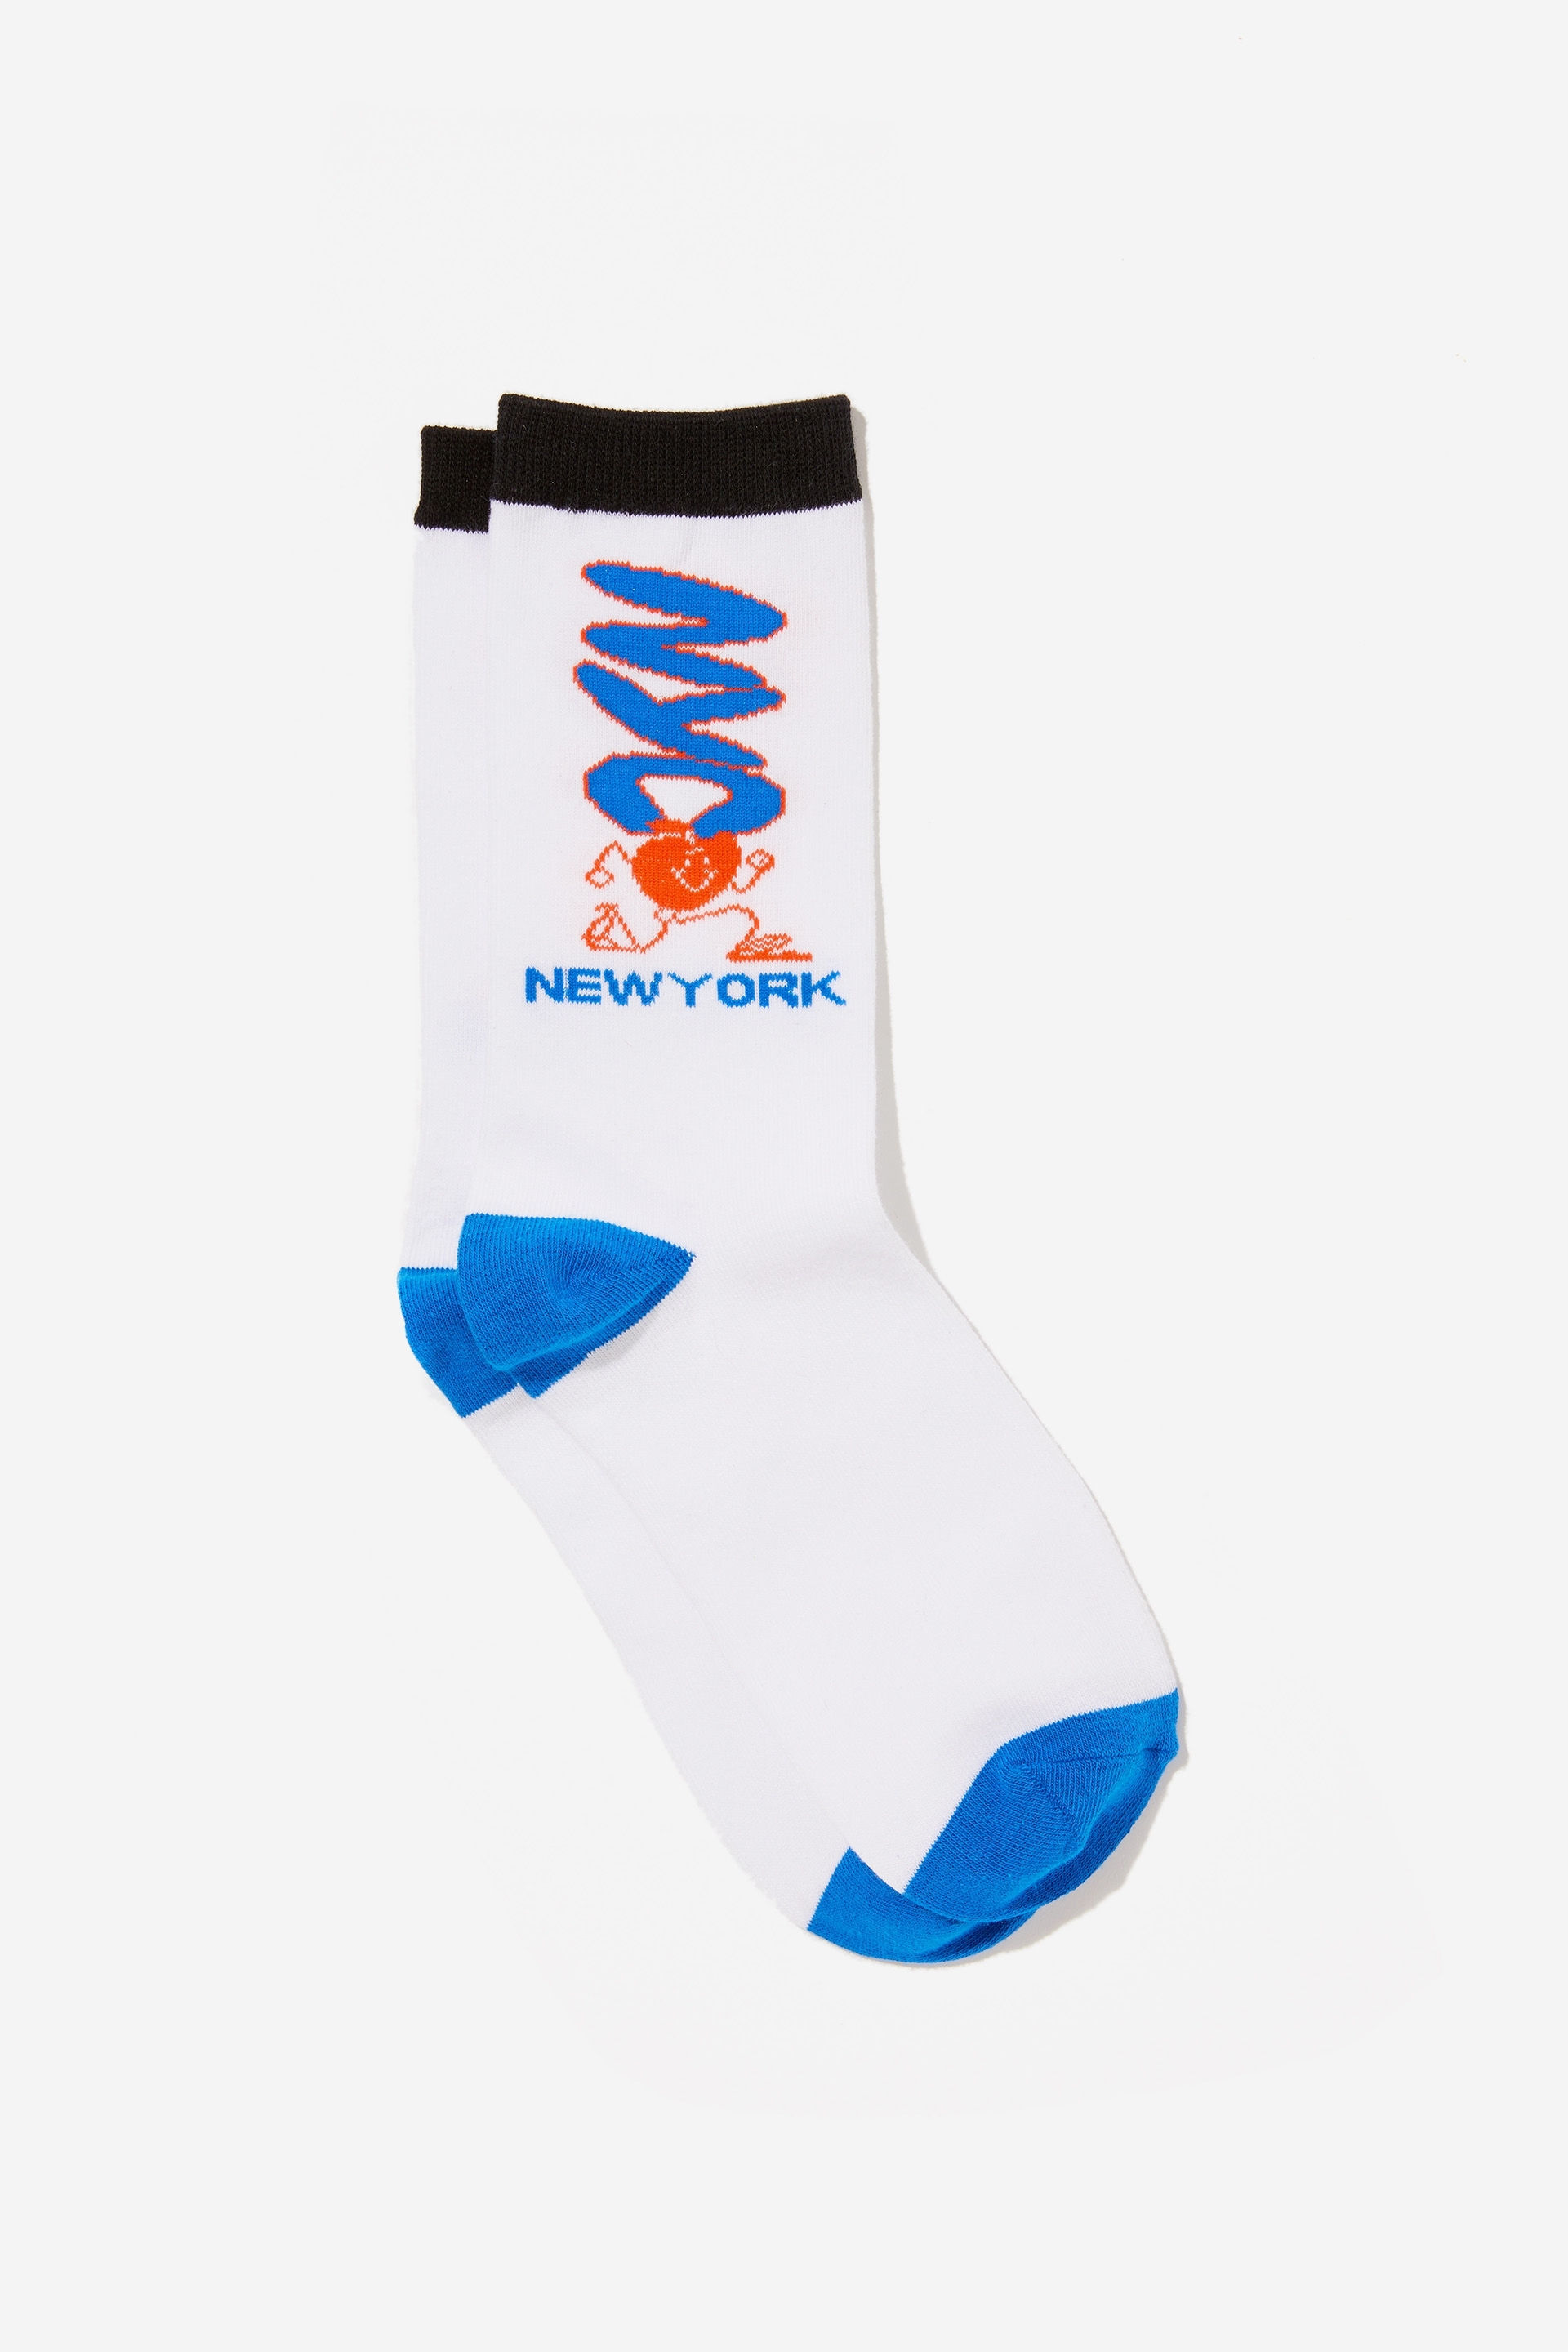 Typo - Socks - Nyc new york